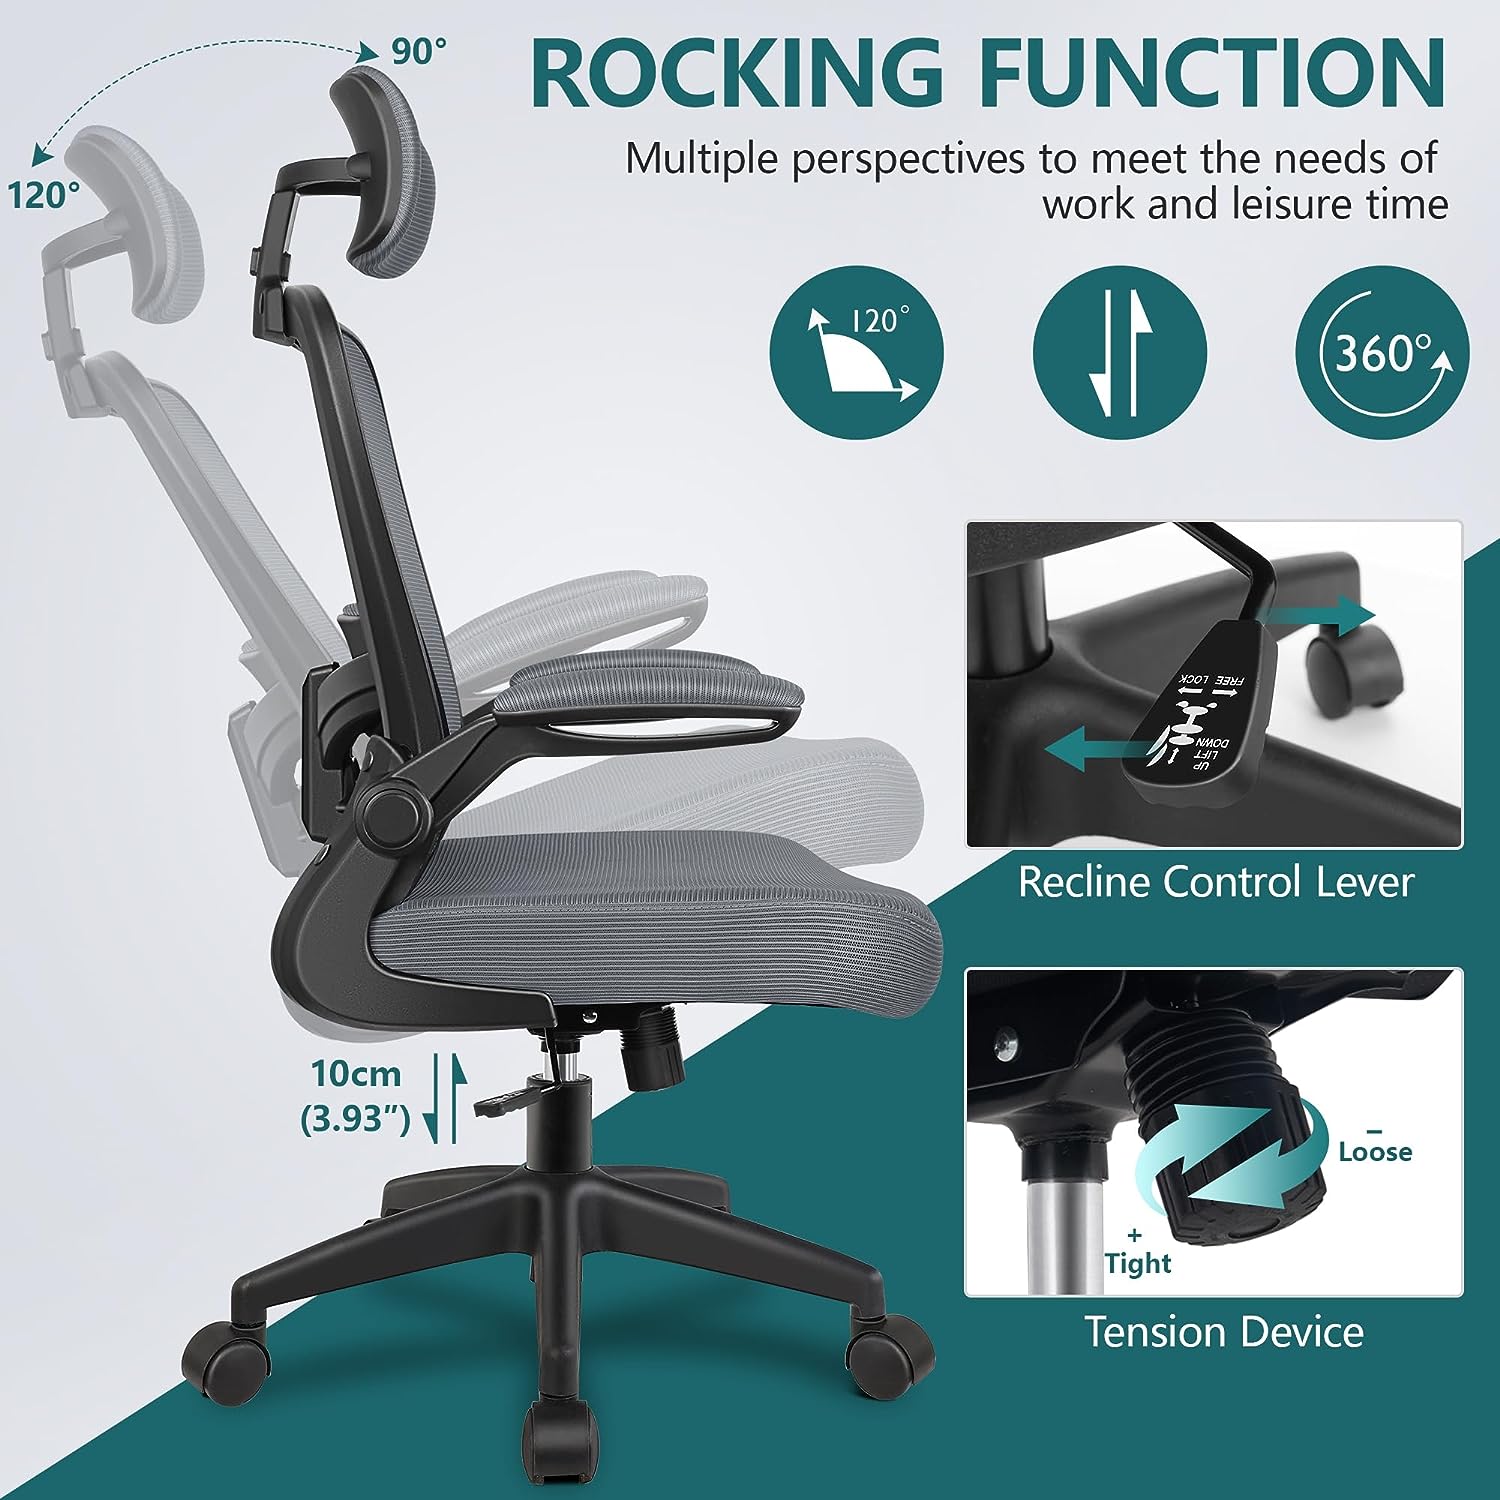 Silla de oficina ergonómica, silla de escritorio con reposacabezas y soporte